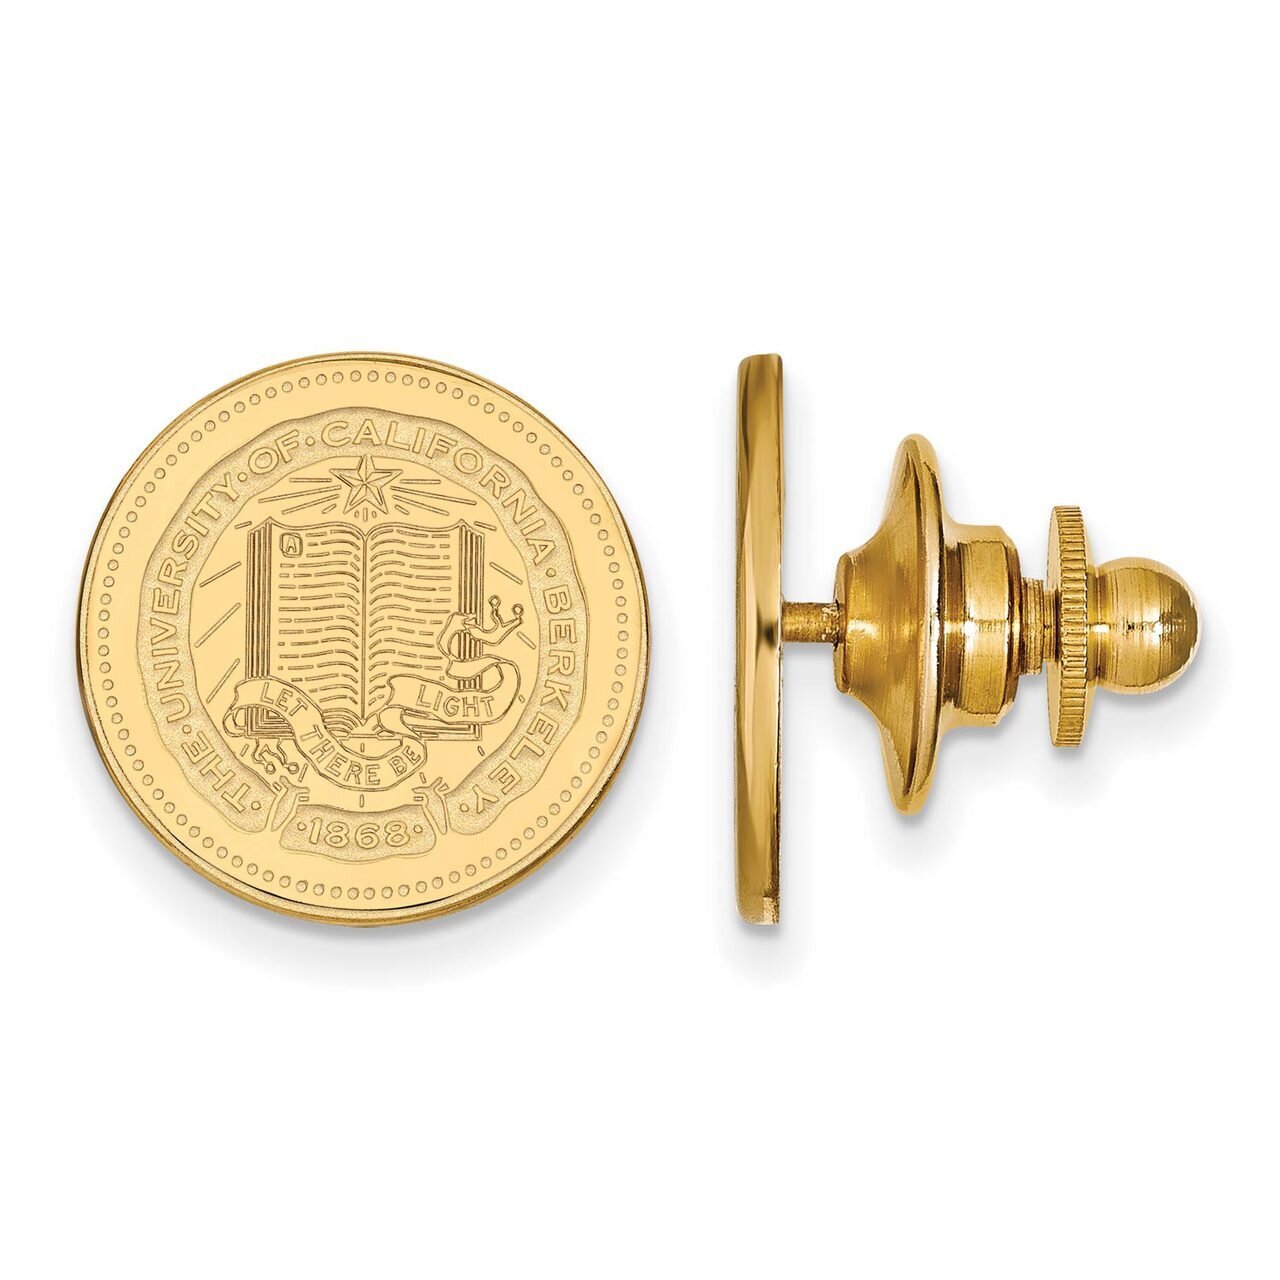 University of California Berkeley Crest Lapel Pin 14k Yellow Gold 4Y040UCB